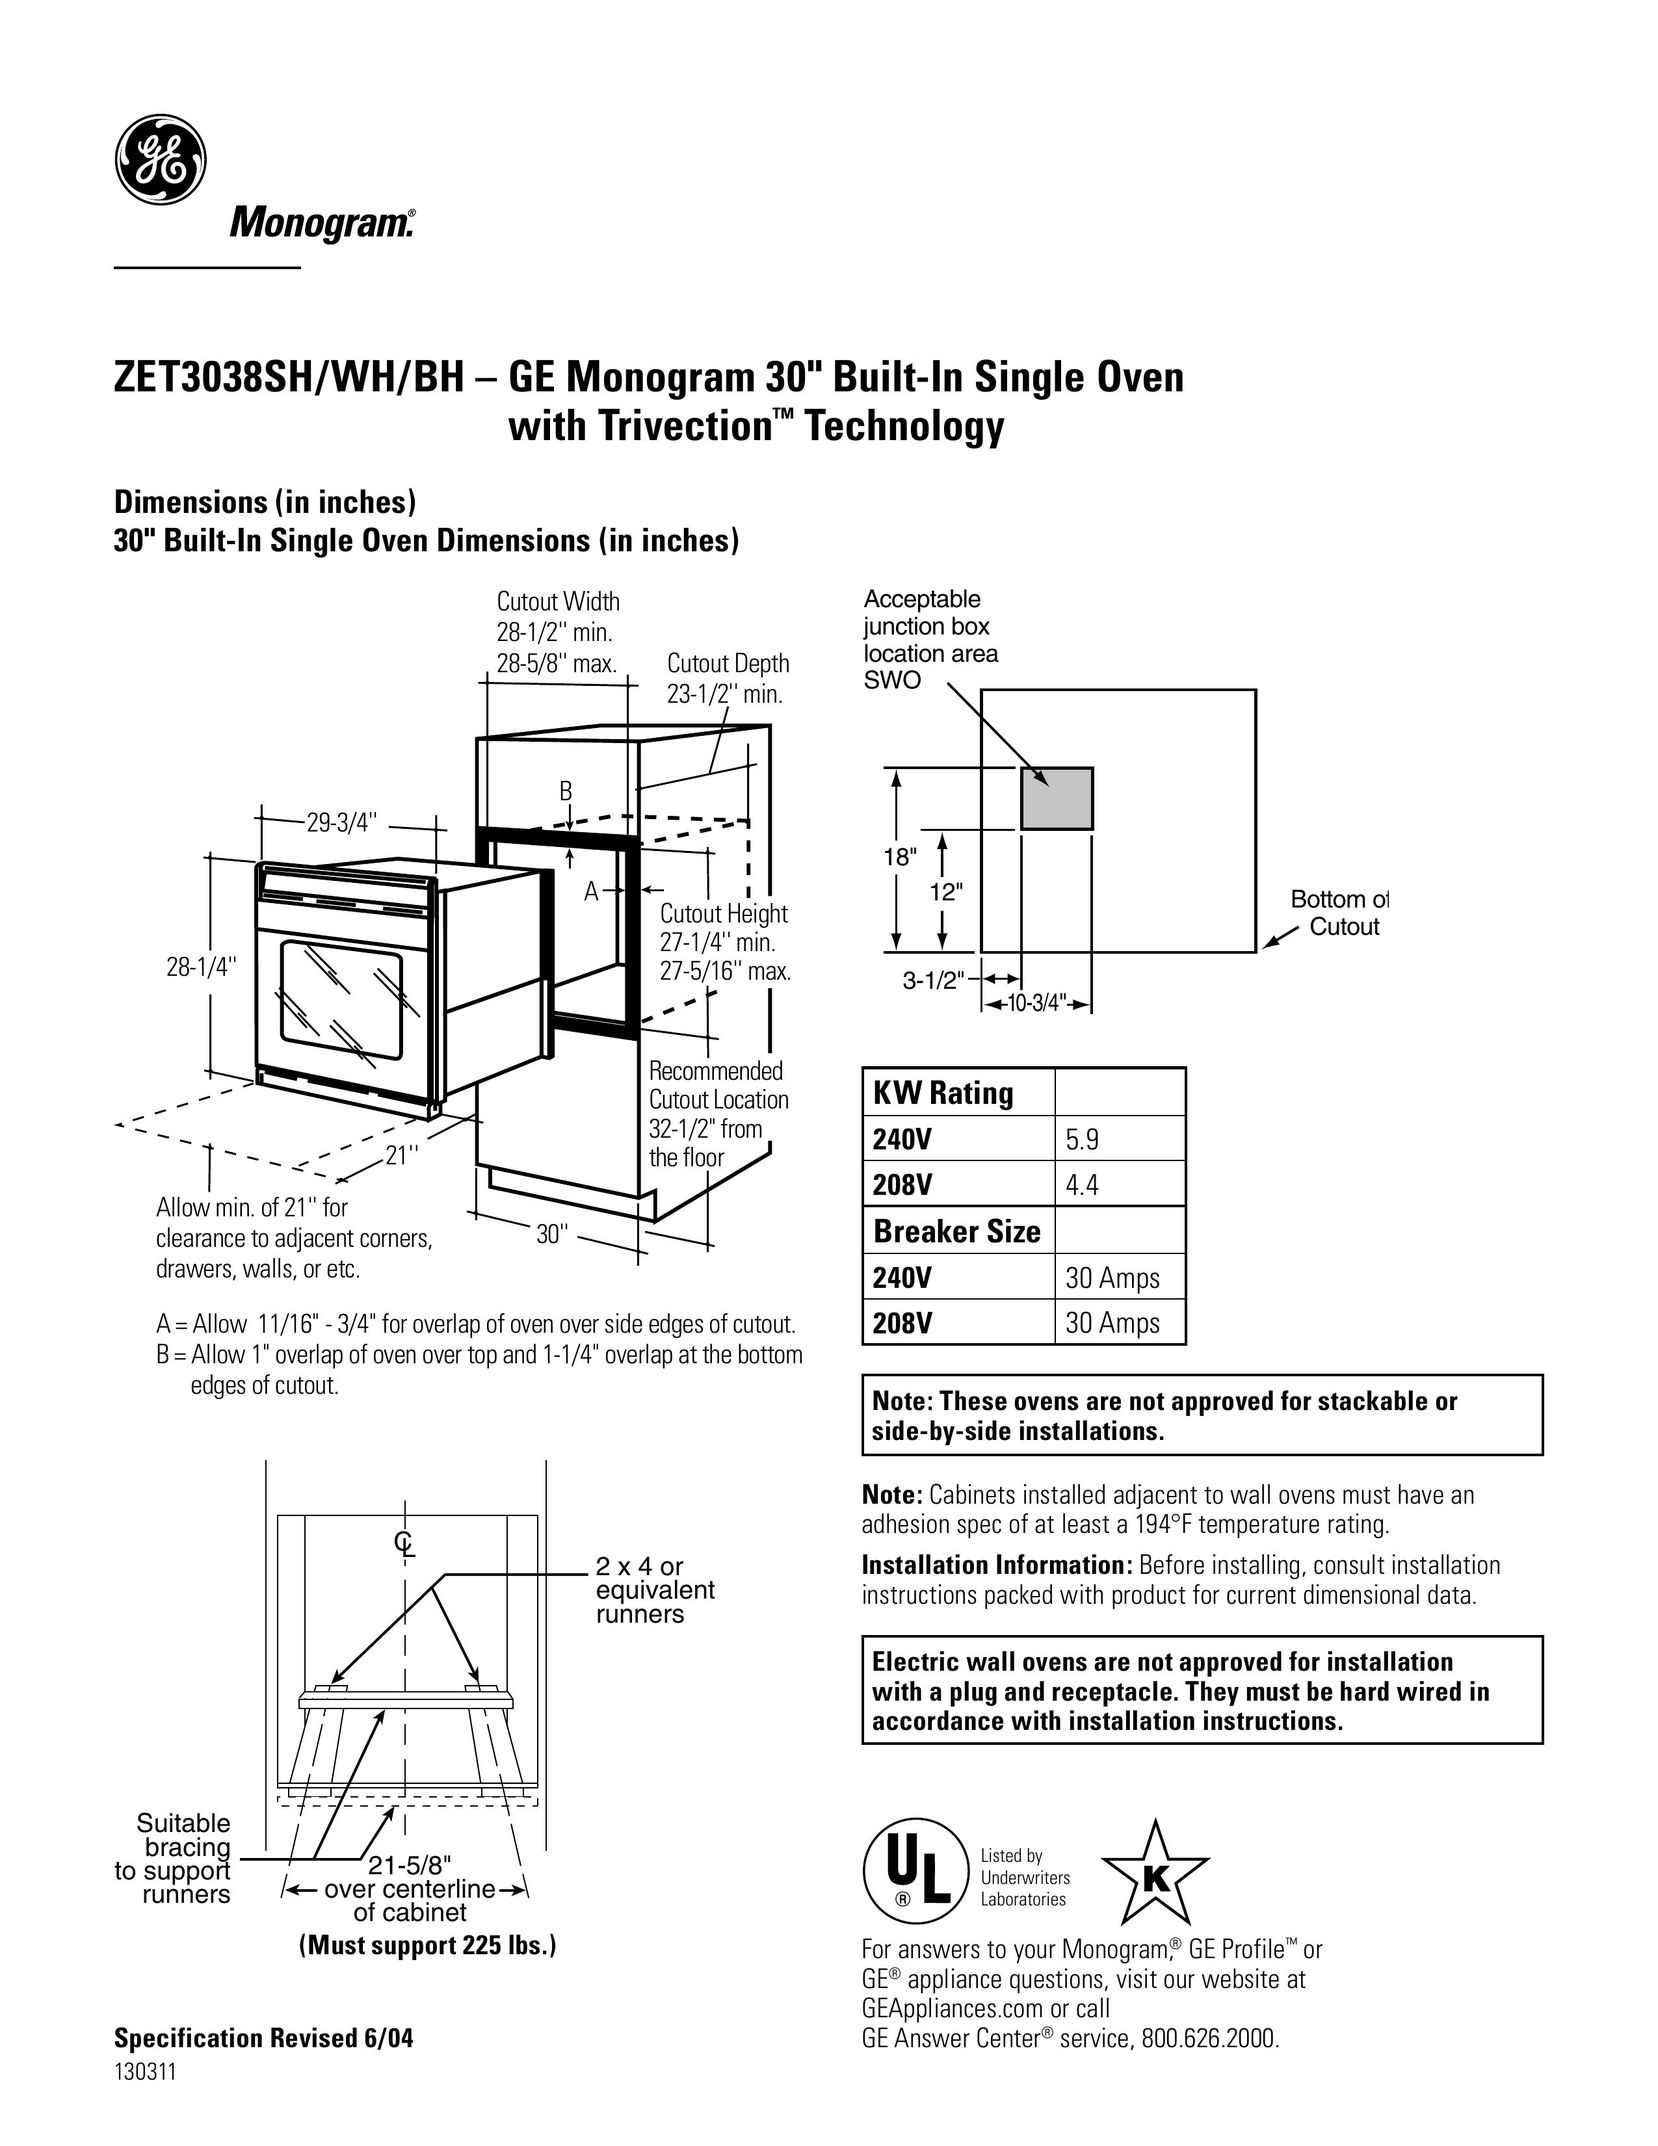 GE Monogram ZET3038SH/WH/BH Oven User Manual